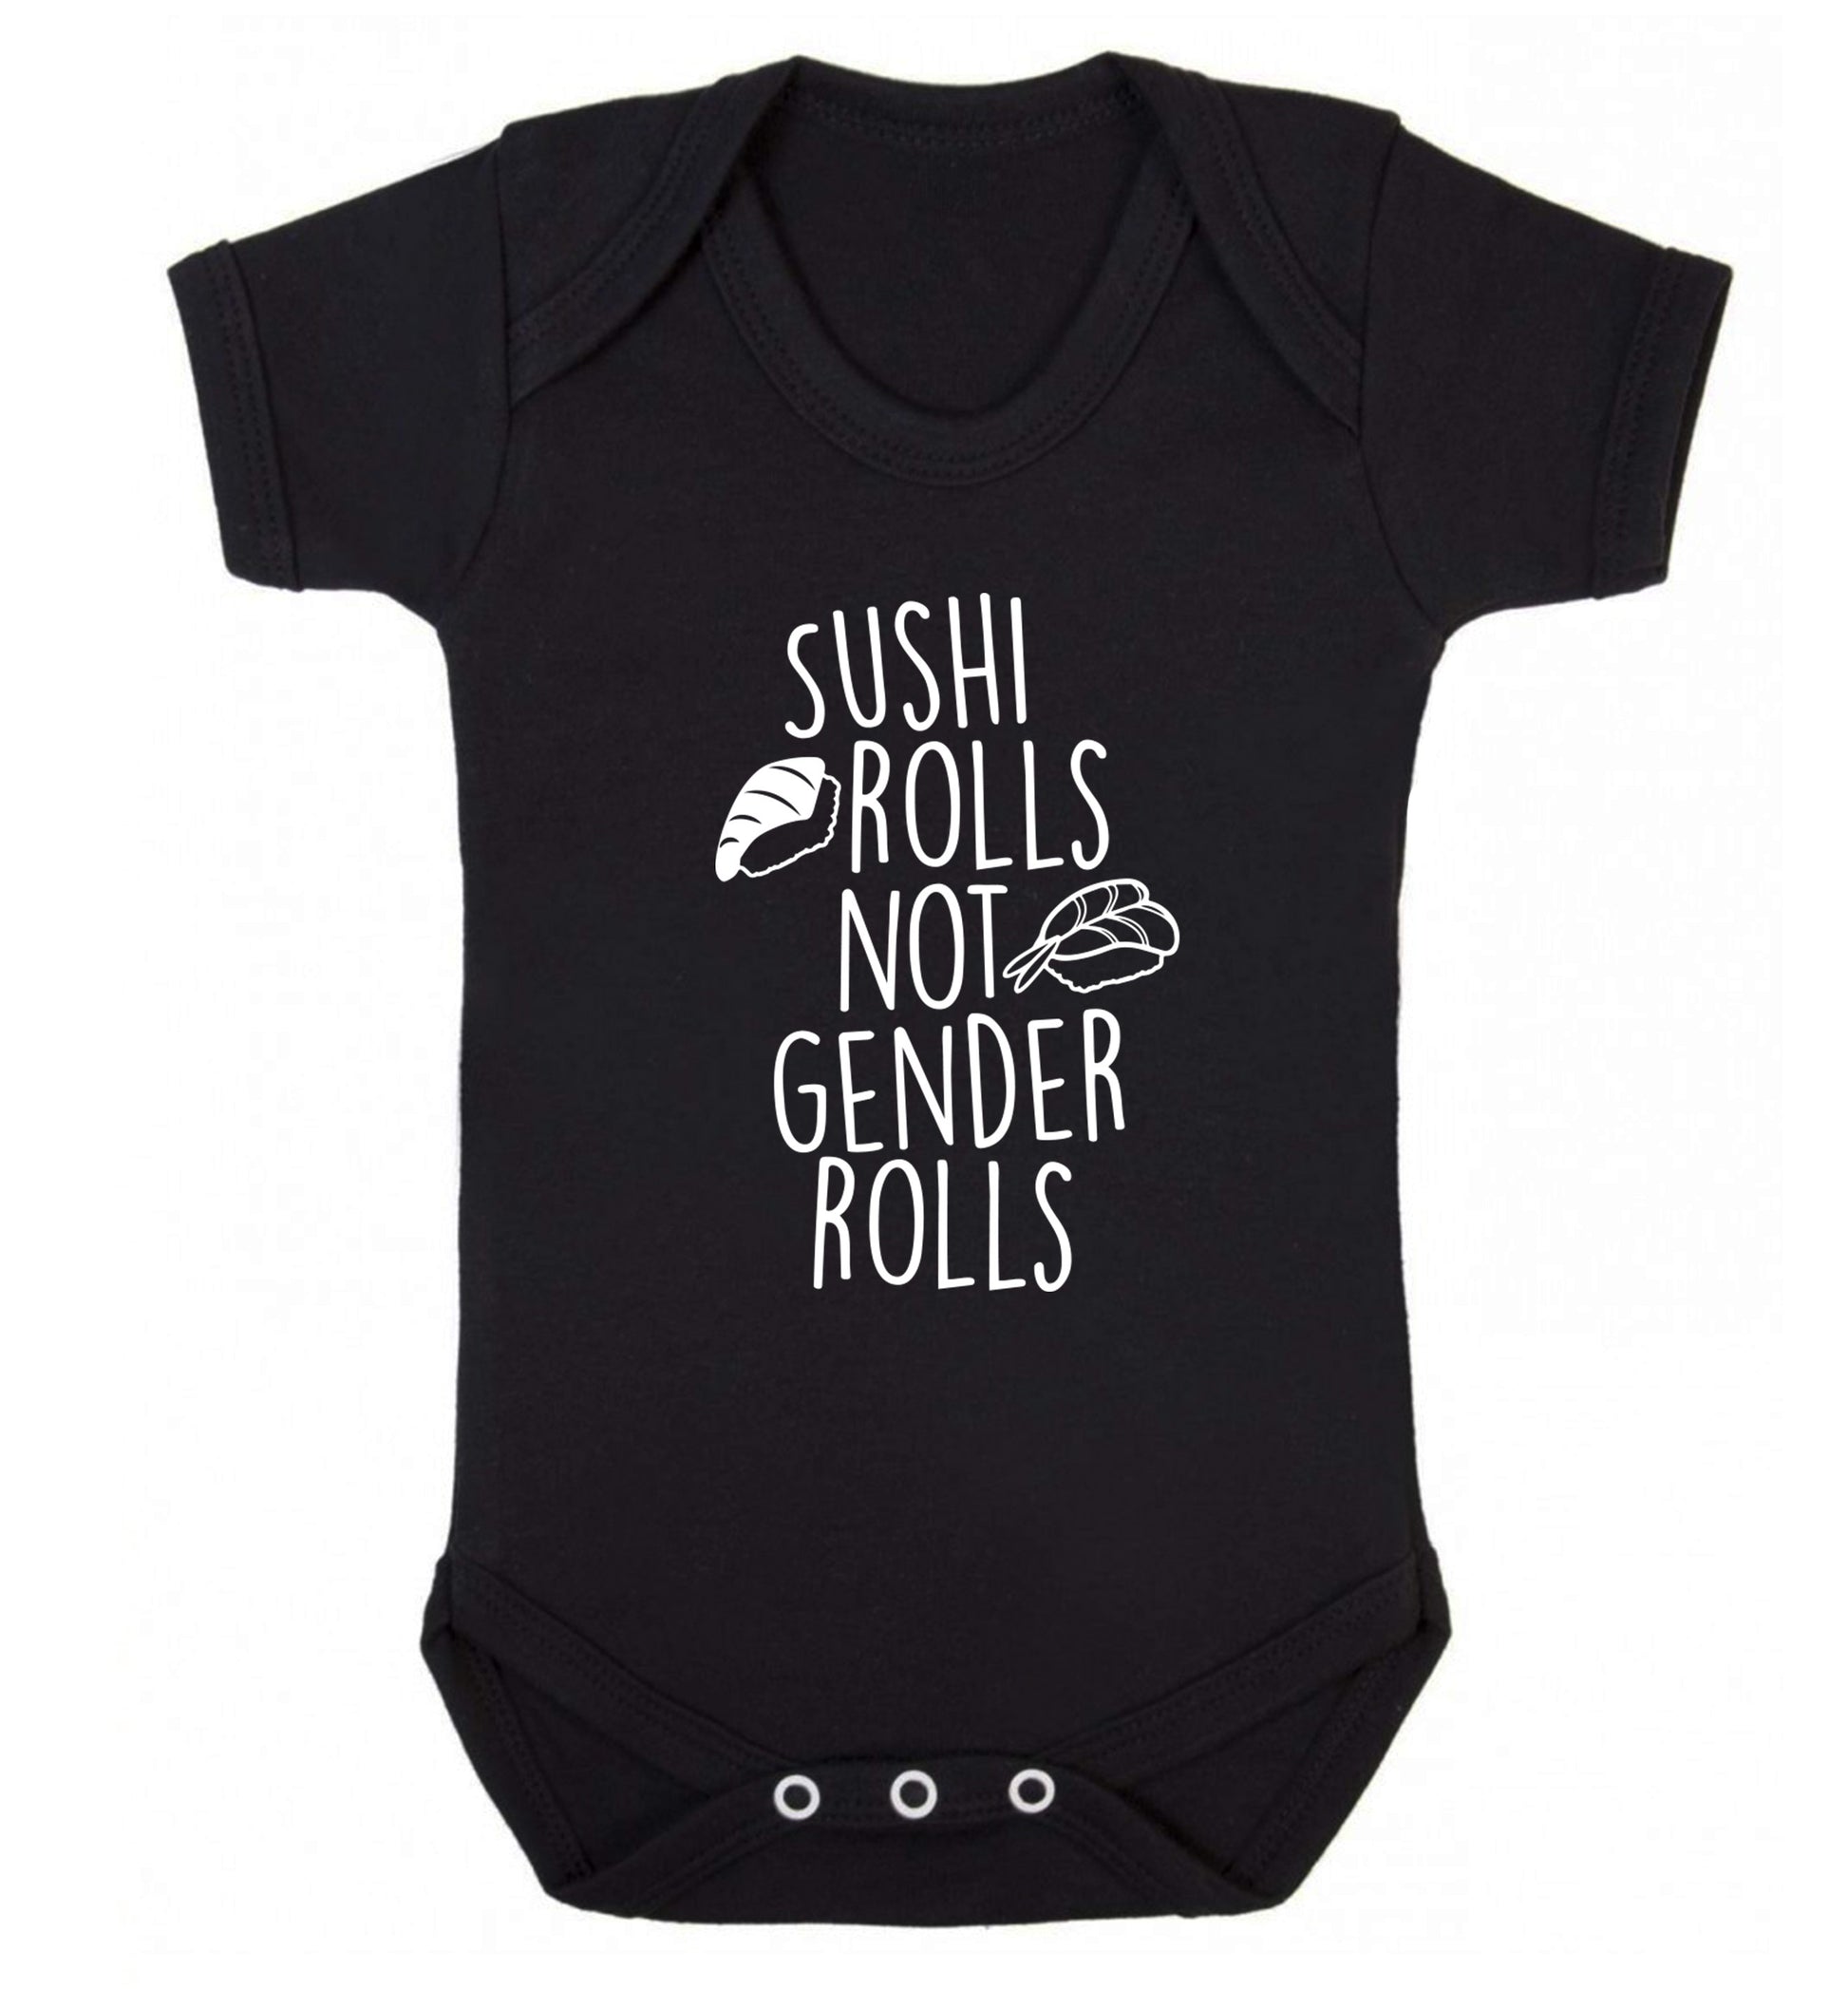 Sushi rolls not gender rolls Baby Vest black 18-24 months